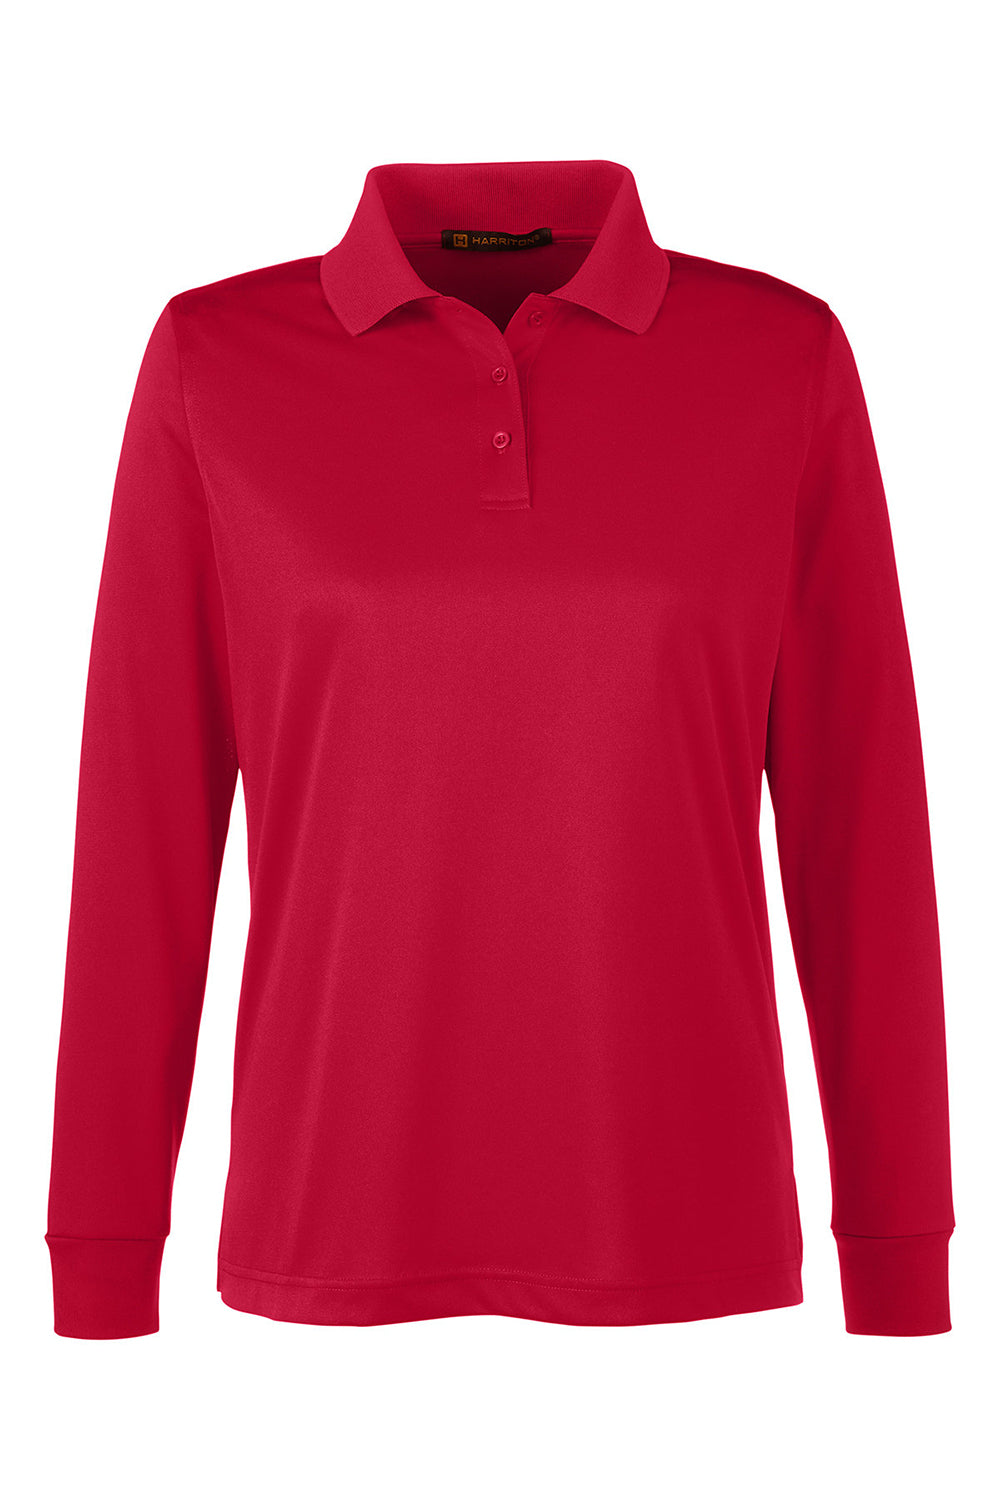 Harriton M348LW Womens Advantage Performance Moisture Wicking Long Sleeve Polo Shirt Red Flat Front